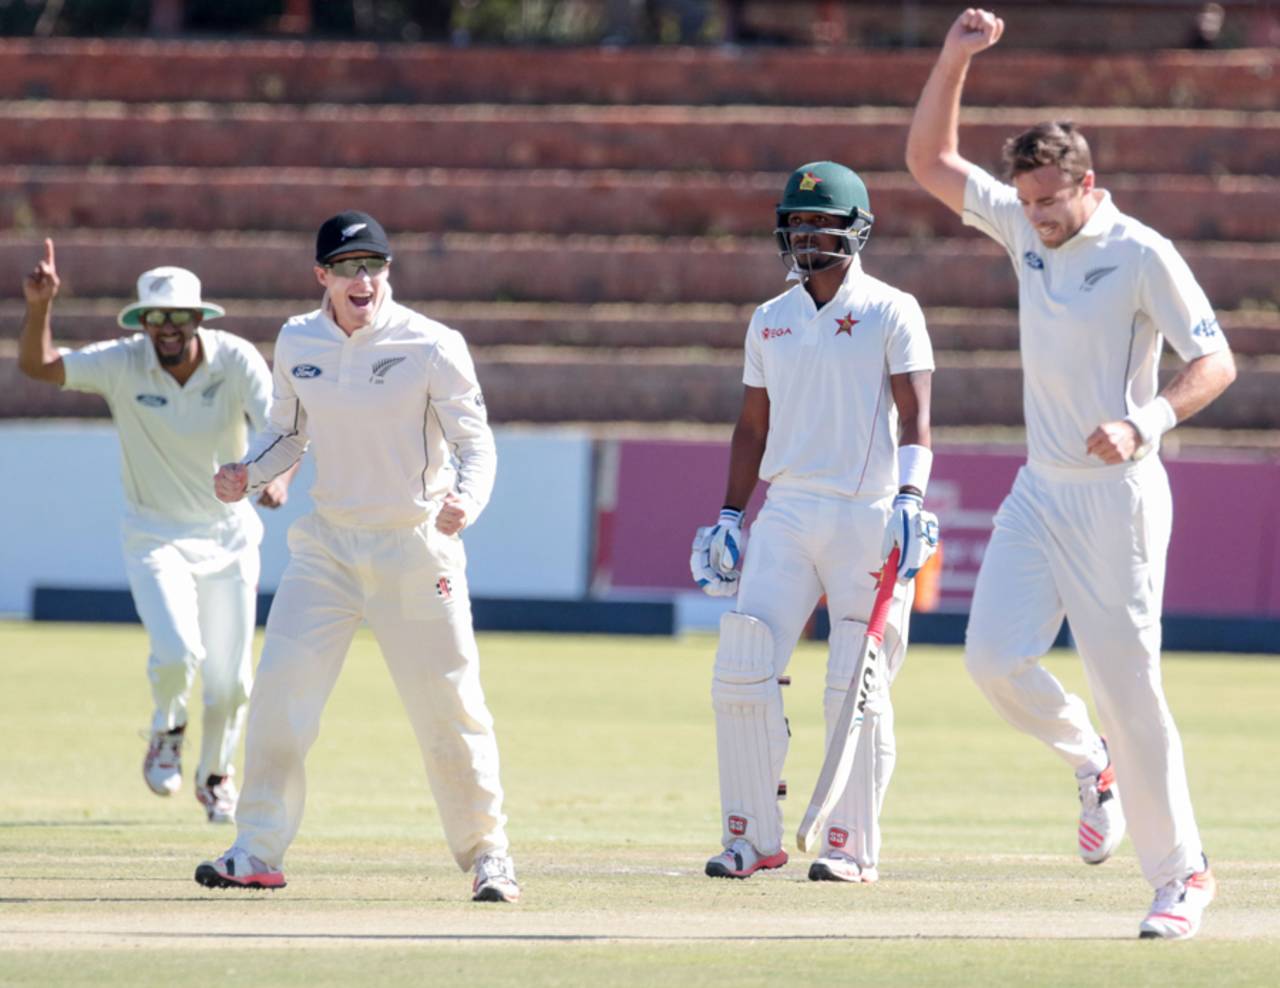 Tim Southee celebrates after getting Tino Mawoyo bowled, Zimbabwe v New Zealand, 2nd Test, Bulawayo, 3rd day, August 8, 2016